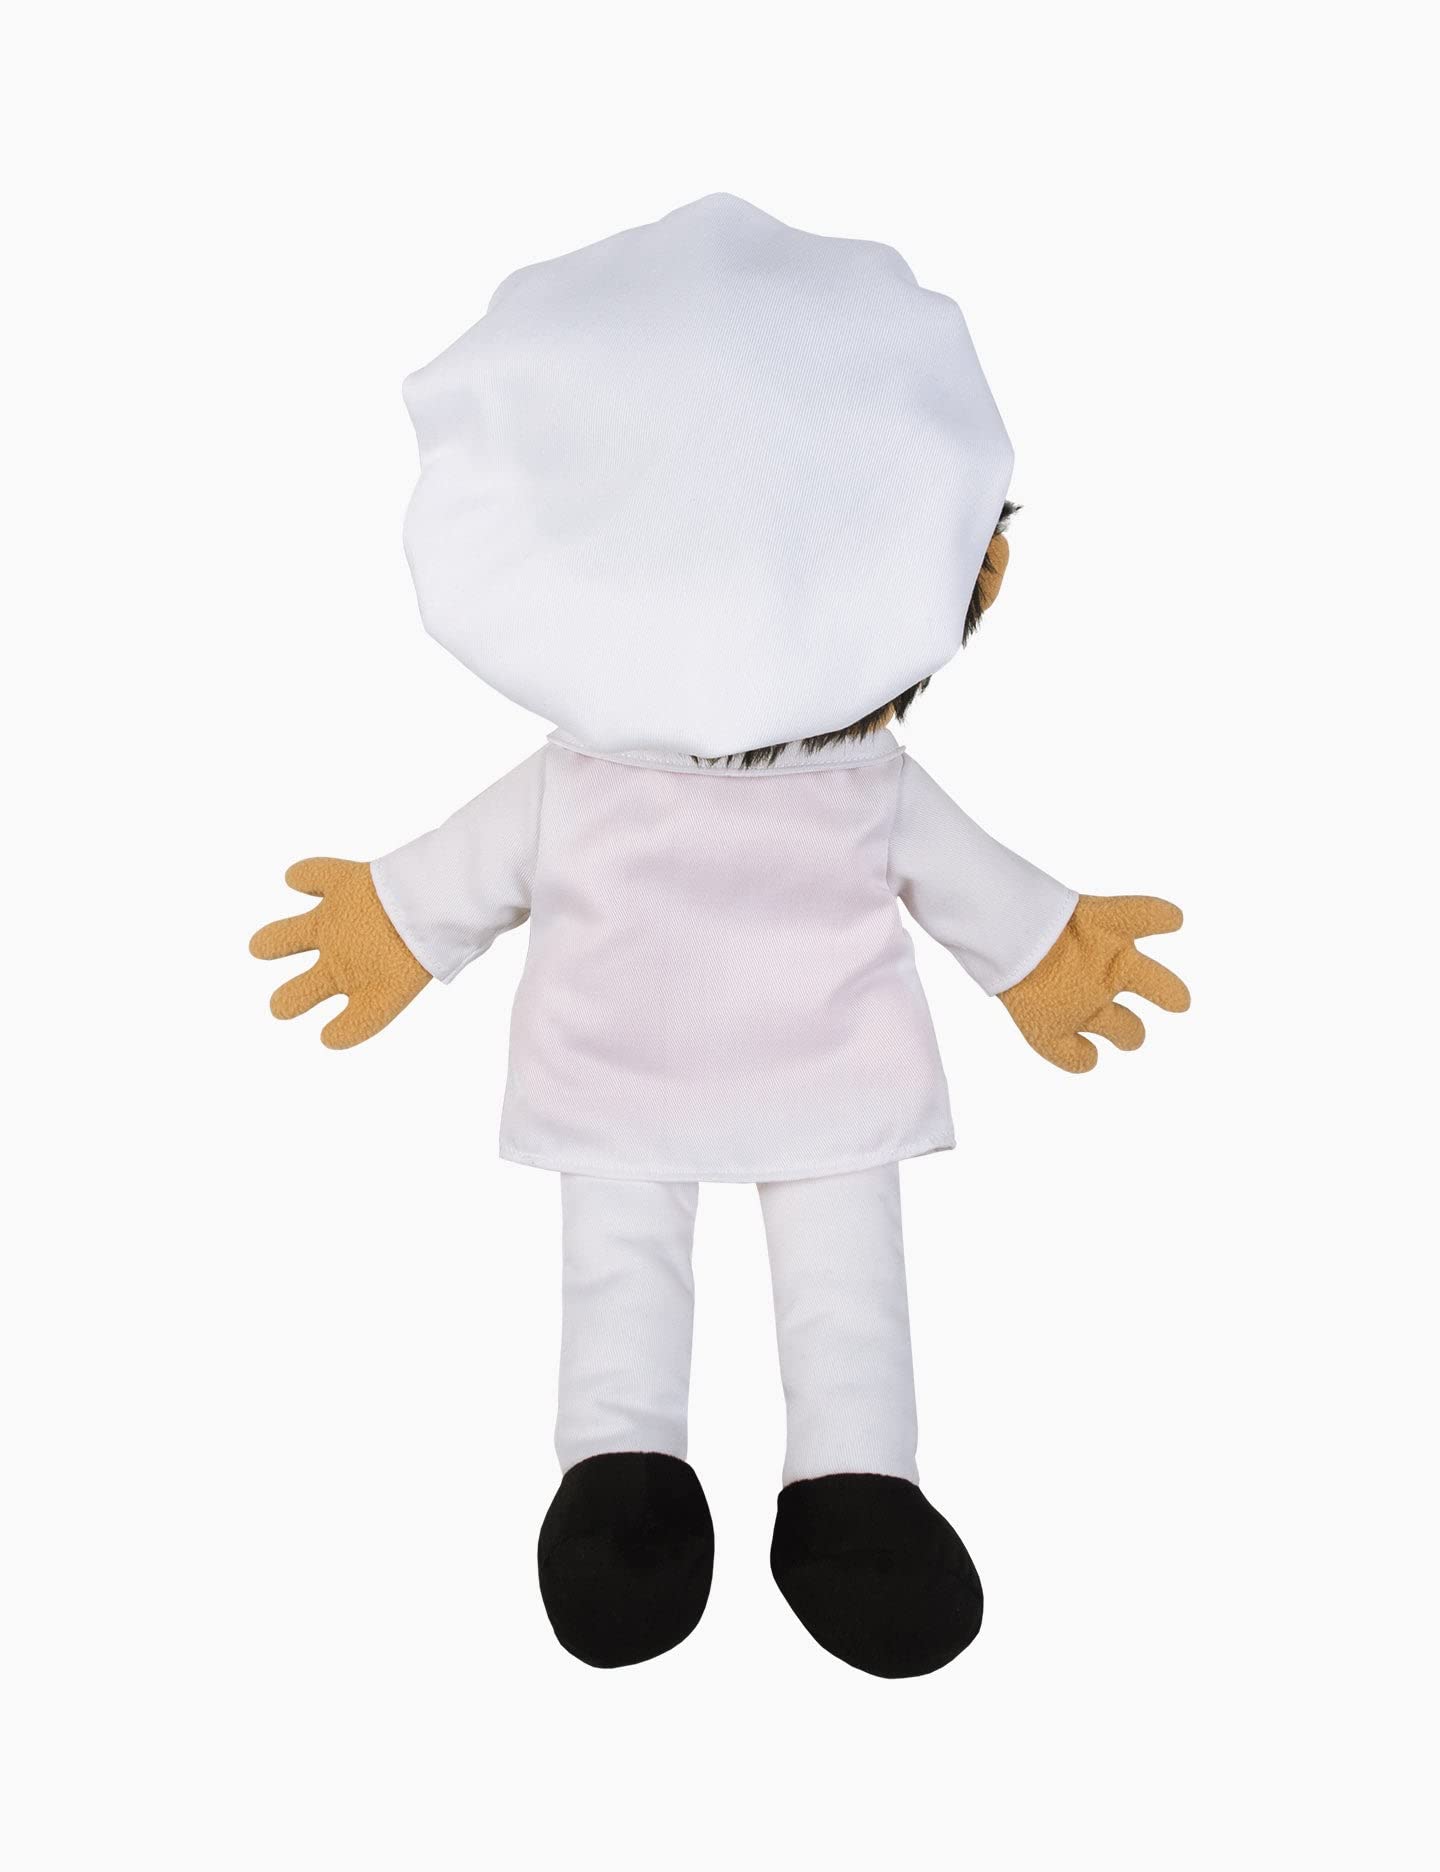 Best of Chef peepee puppet amazon